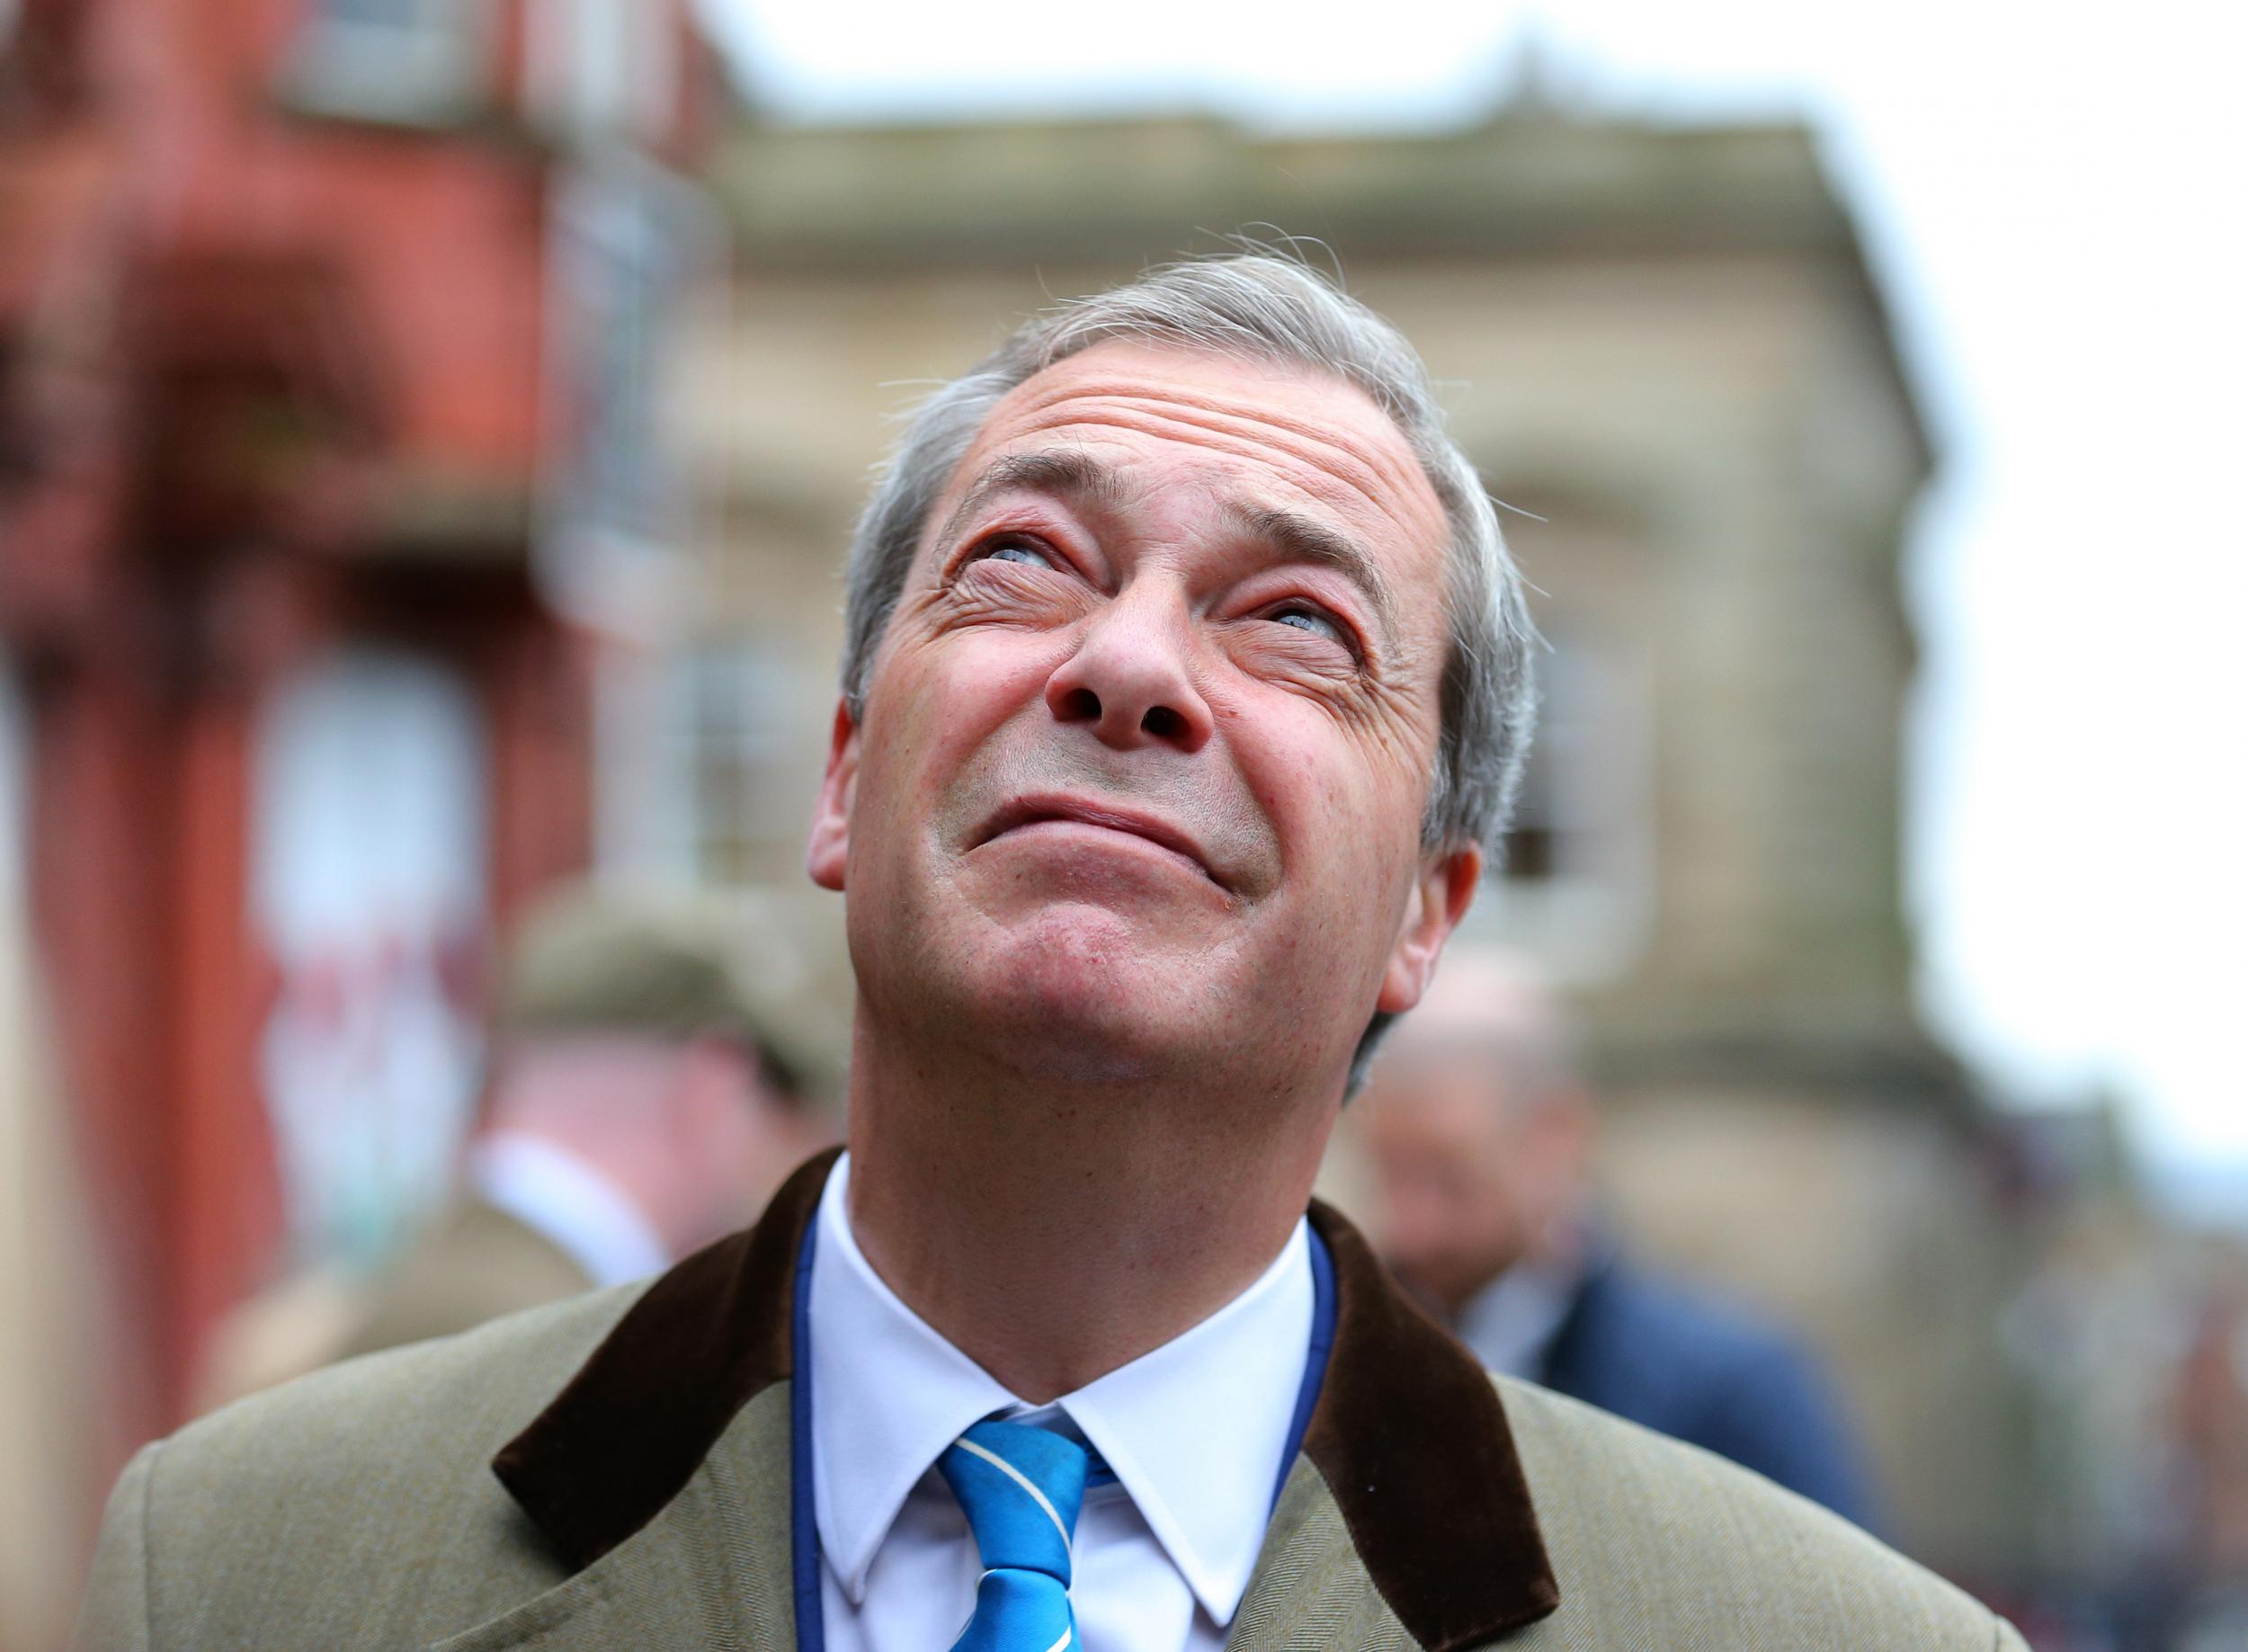 One party insider blamed Nigel Farage's U-Turn for alienating members.